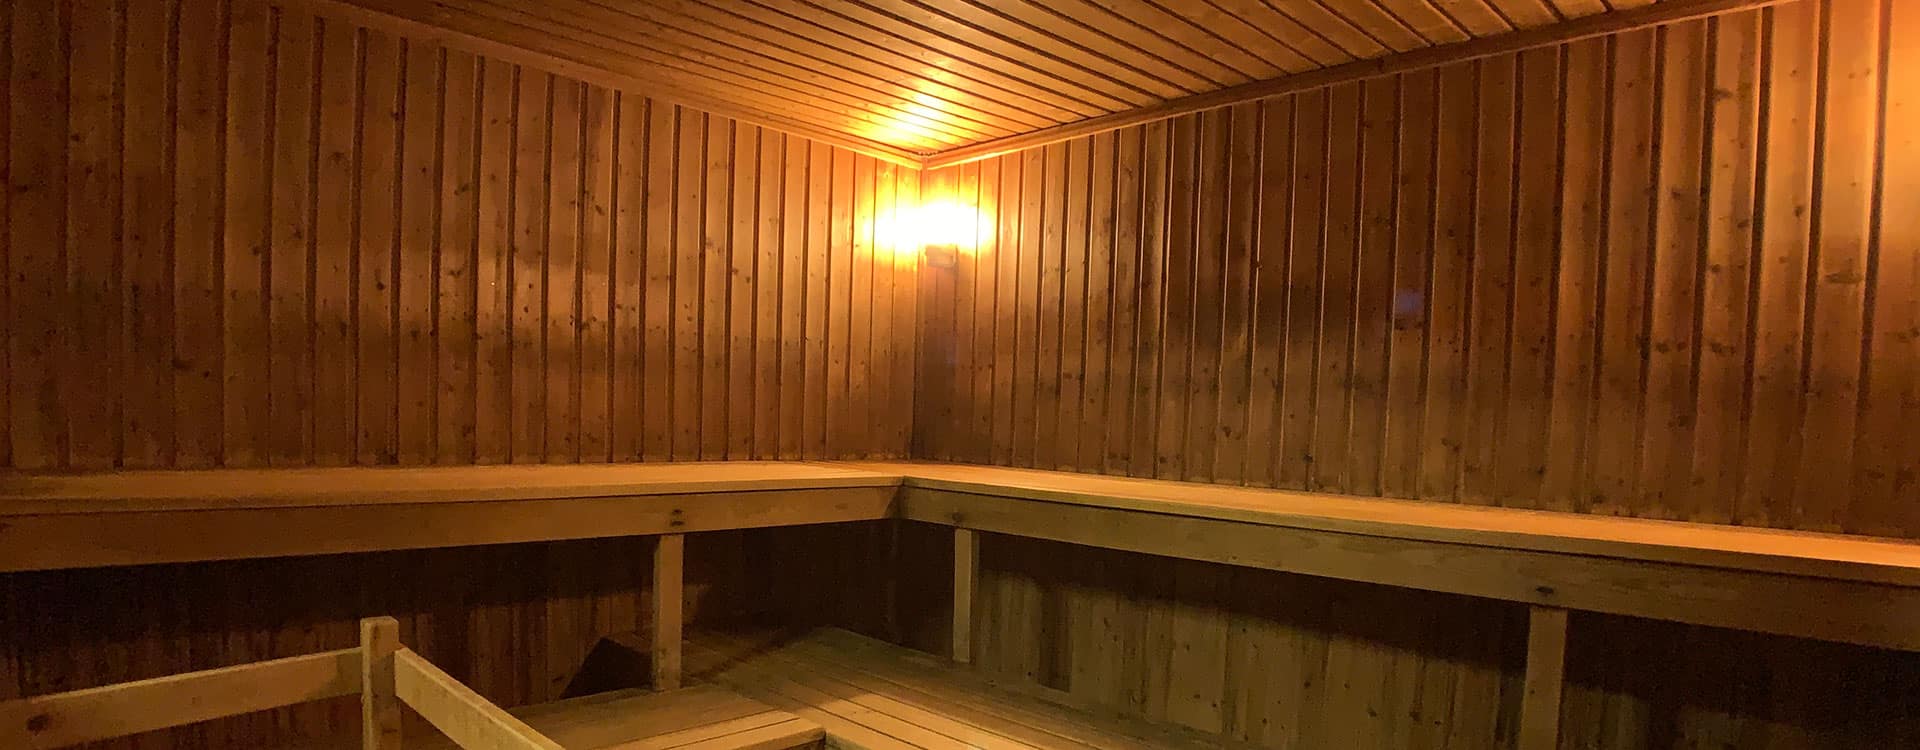 Konzept Sauna